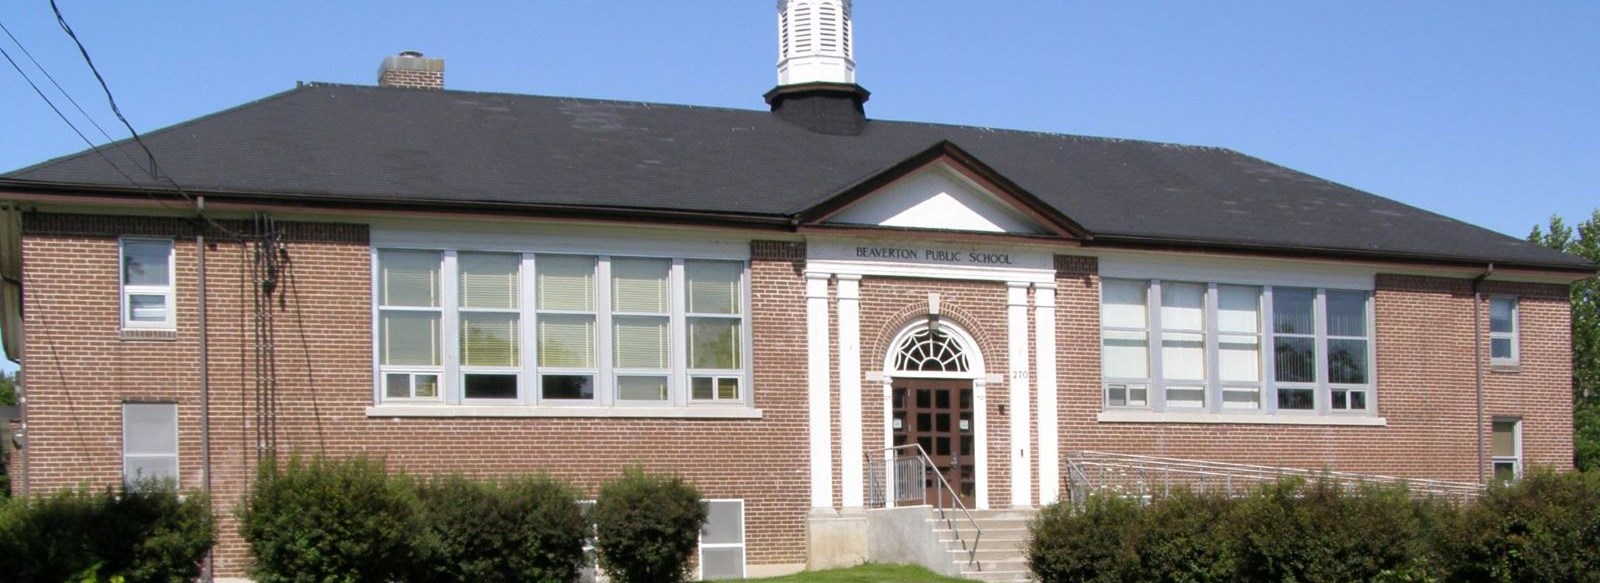 Beaverton Public School